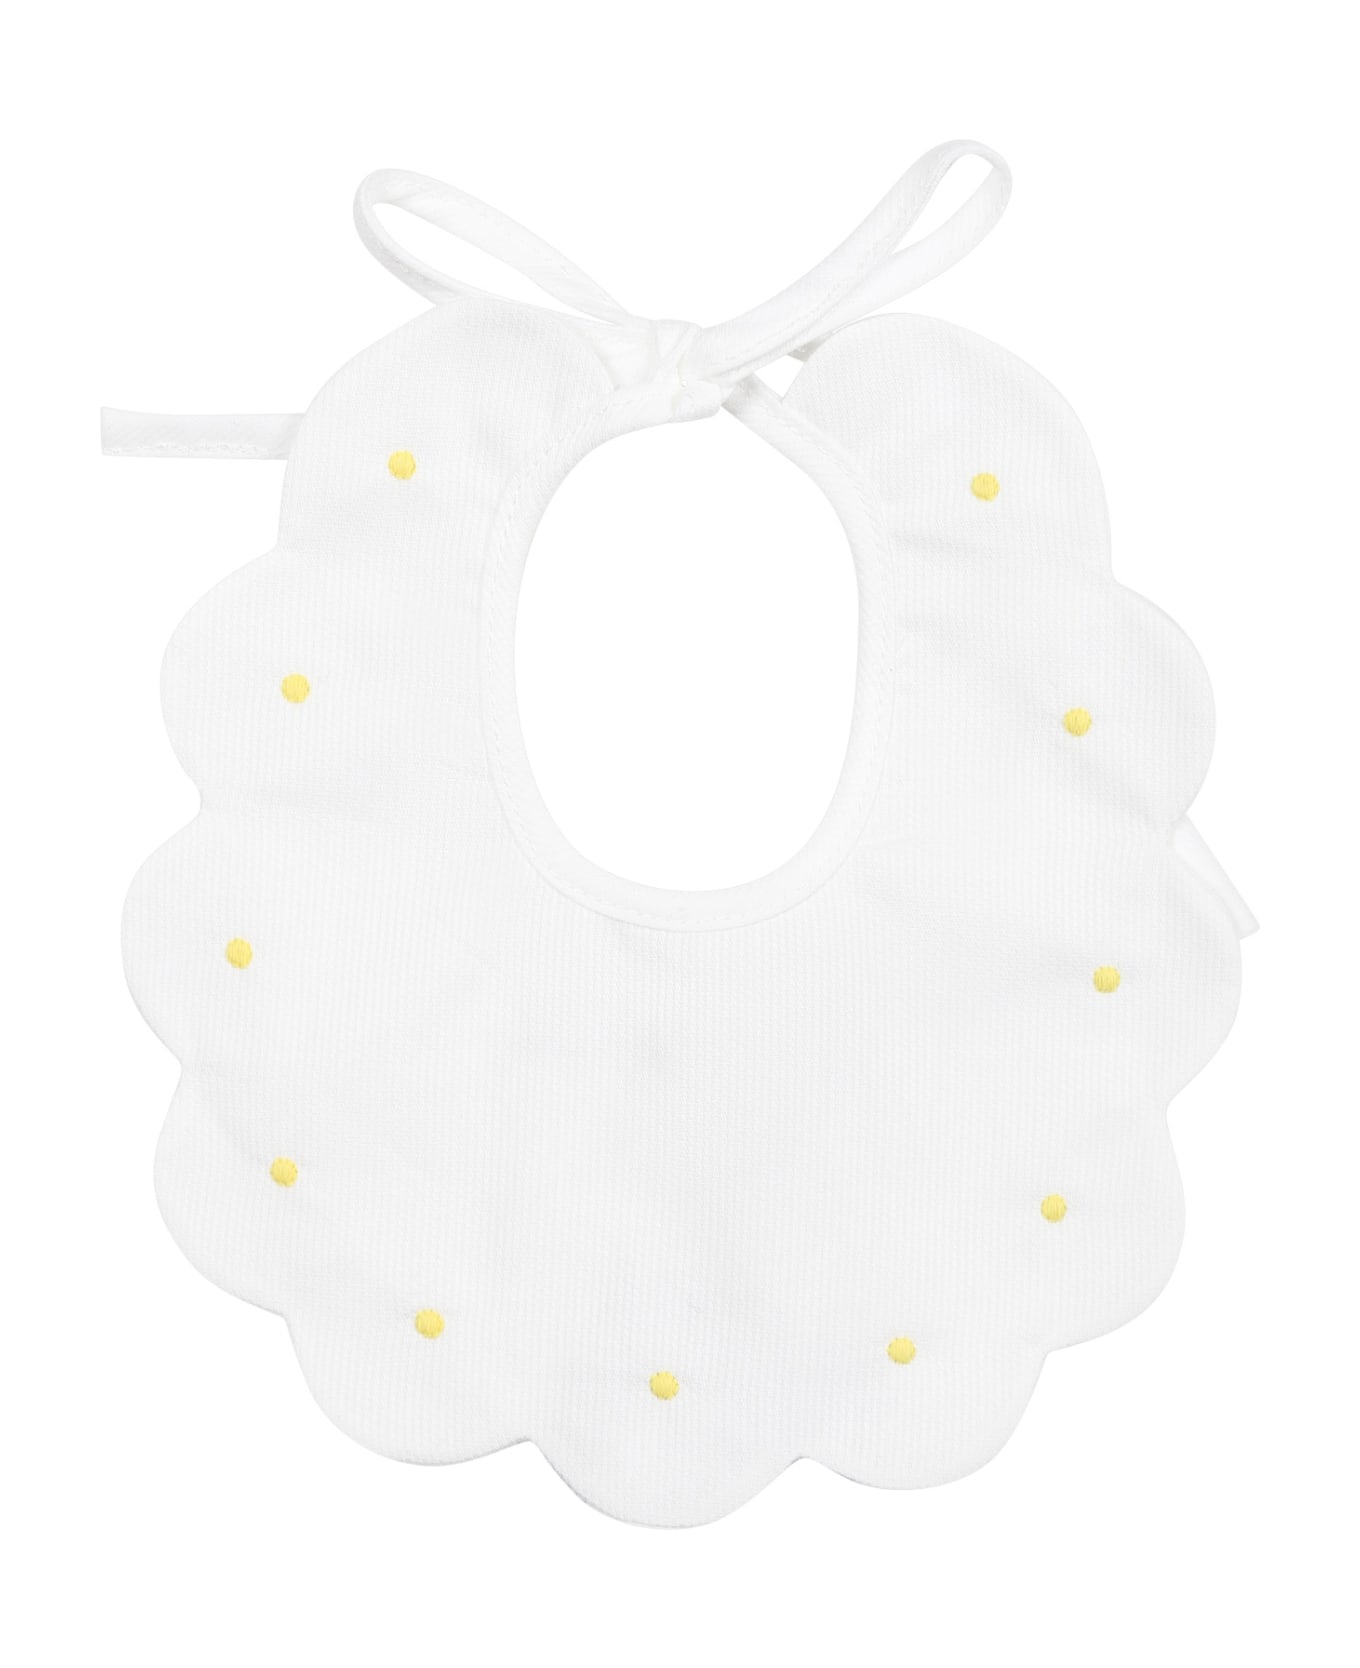 Little Bear White Bib For Baby Kids With Polka Dots - White